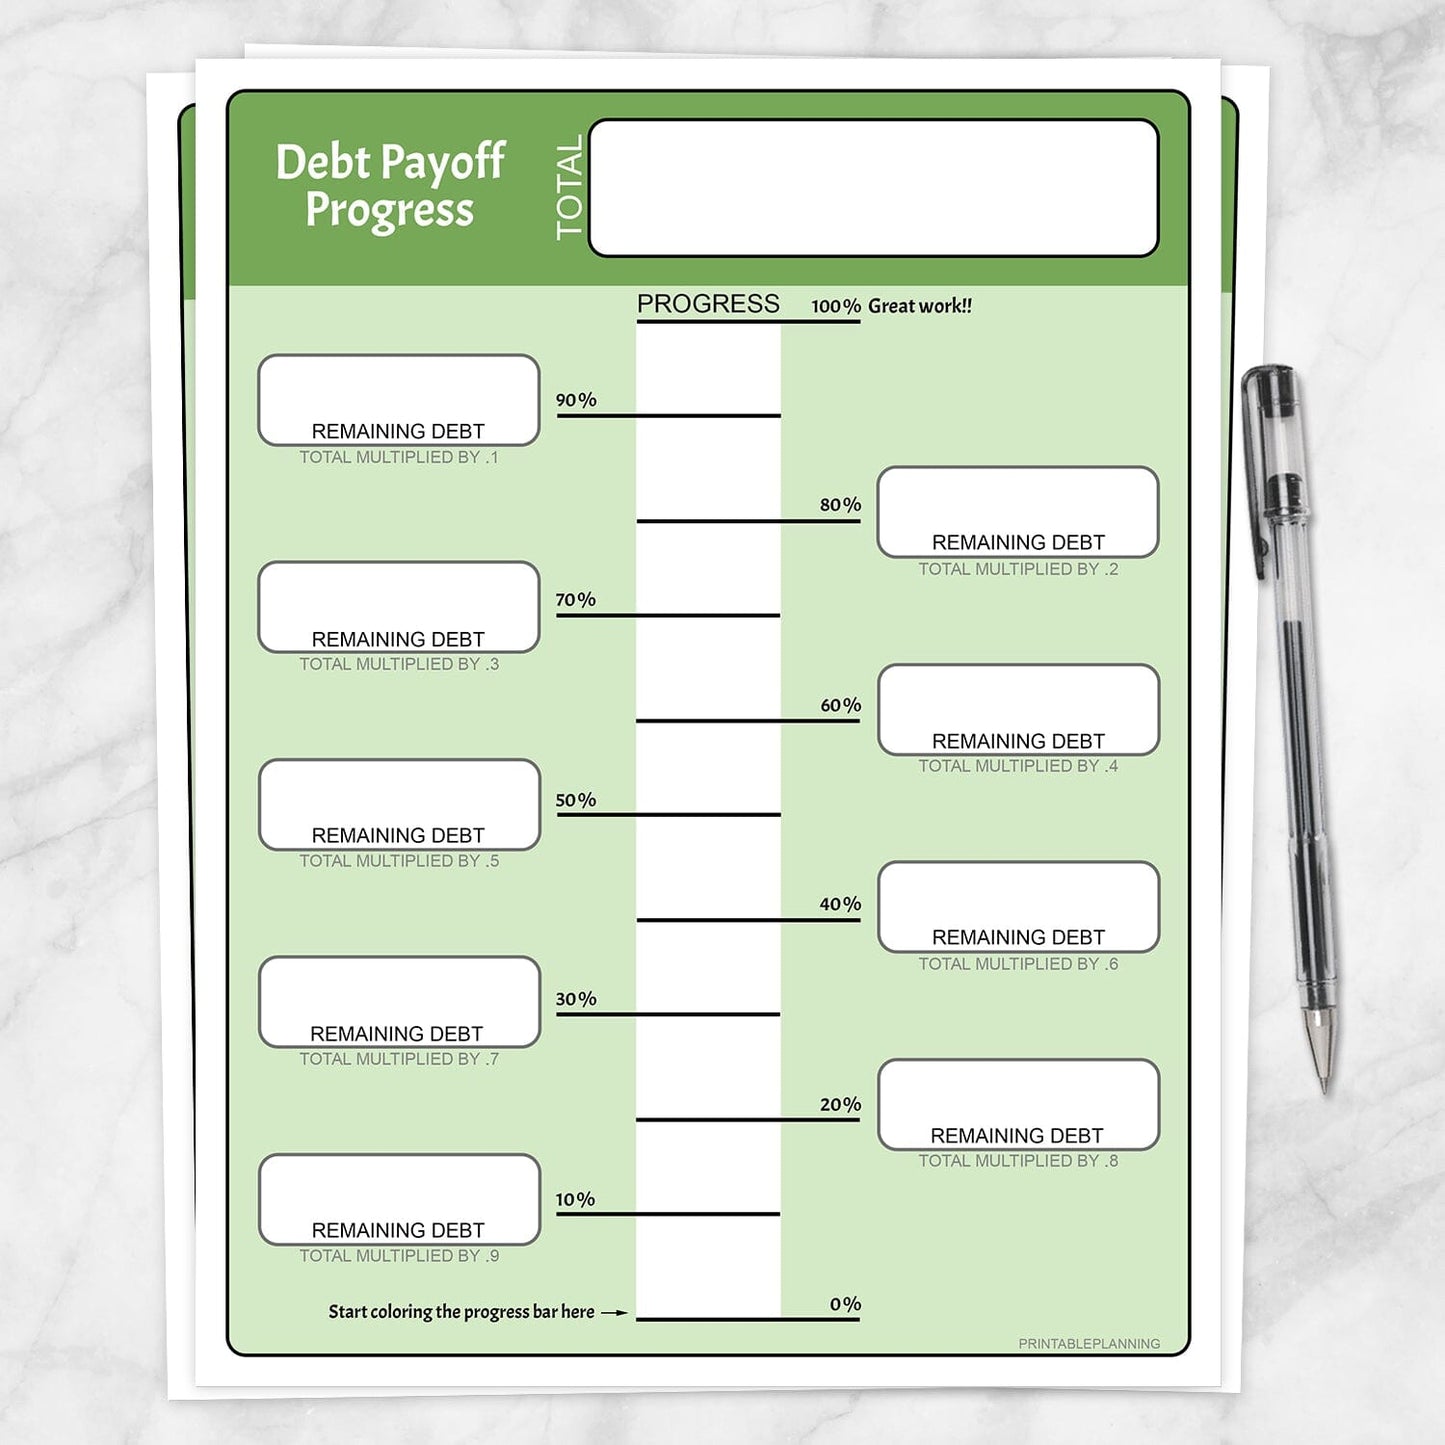 Printable Remaining Debt Payoff Progress Bar Worksheets in Green at Printable Planning.